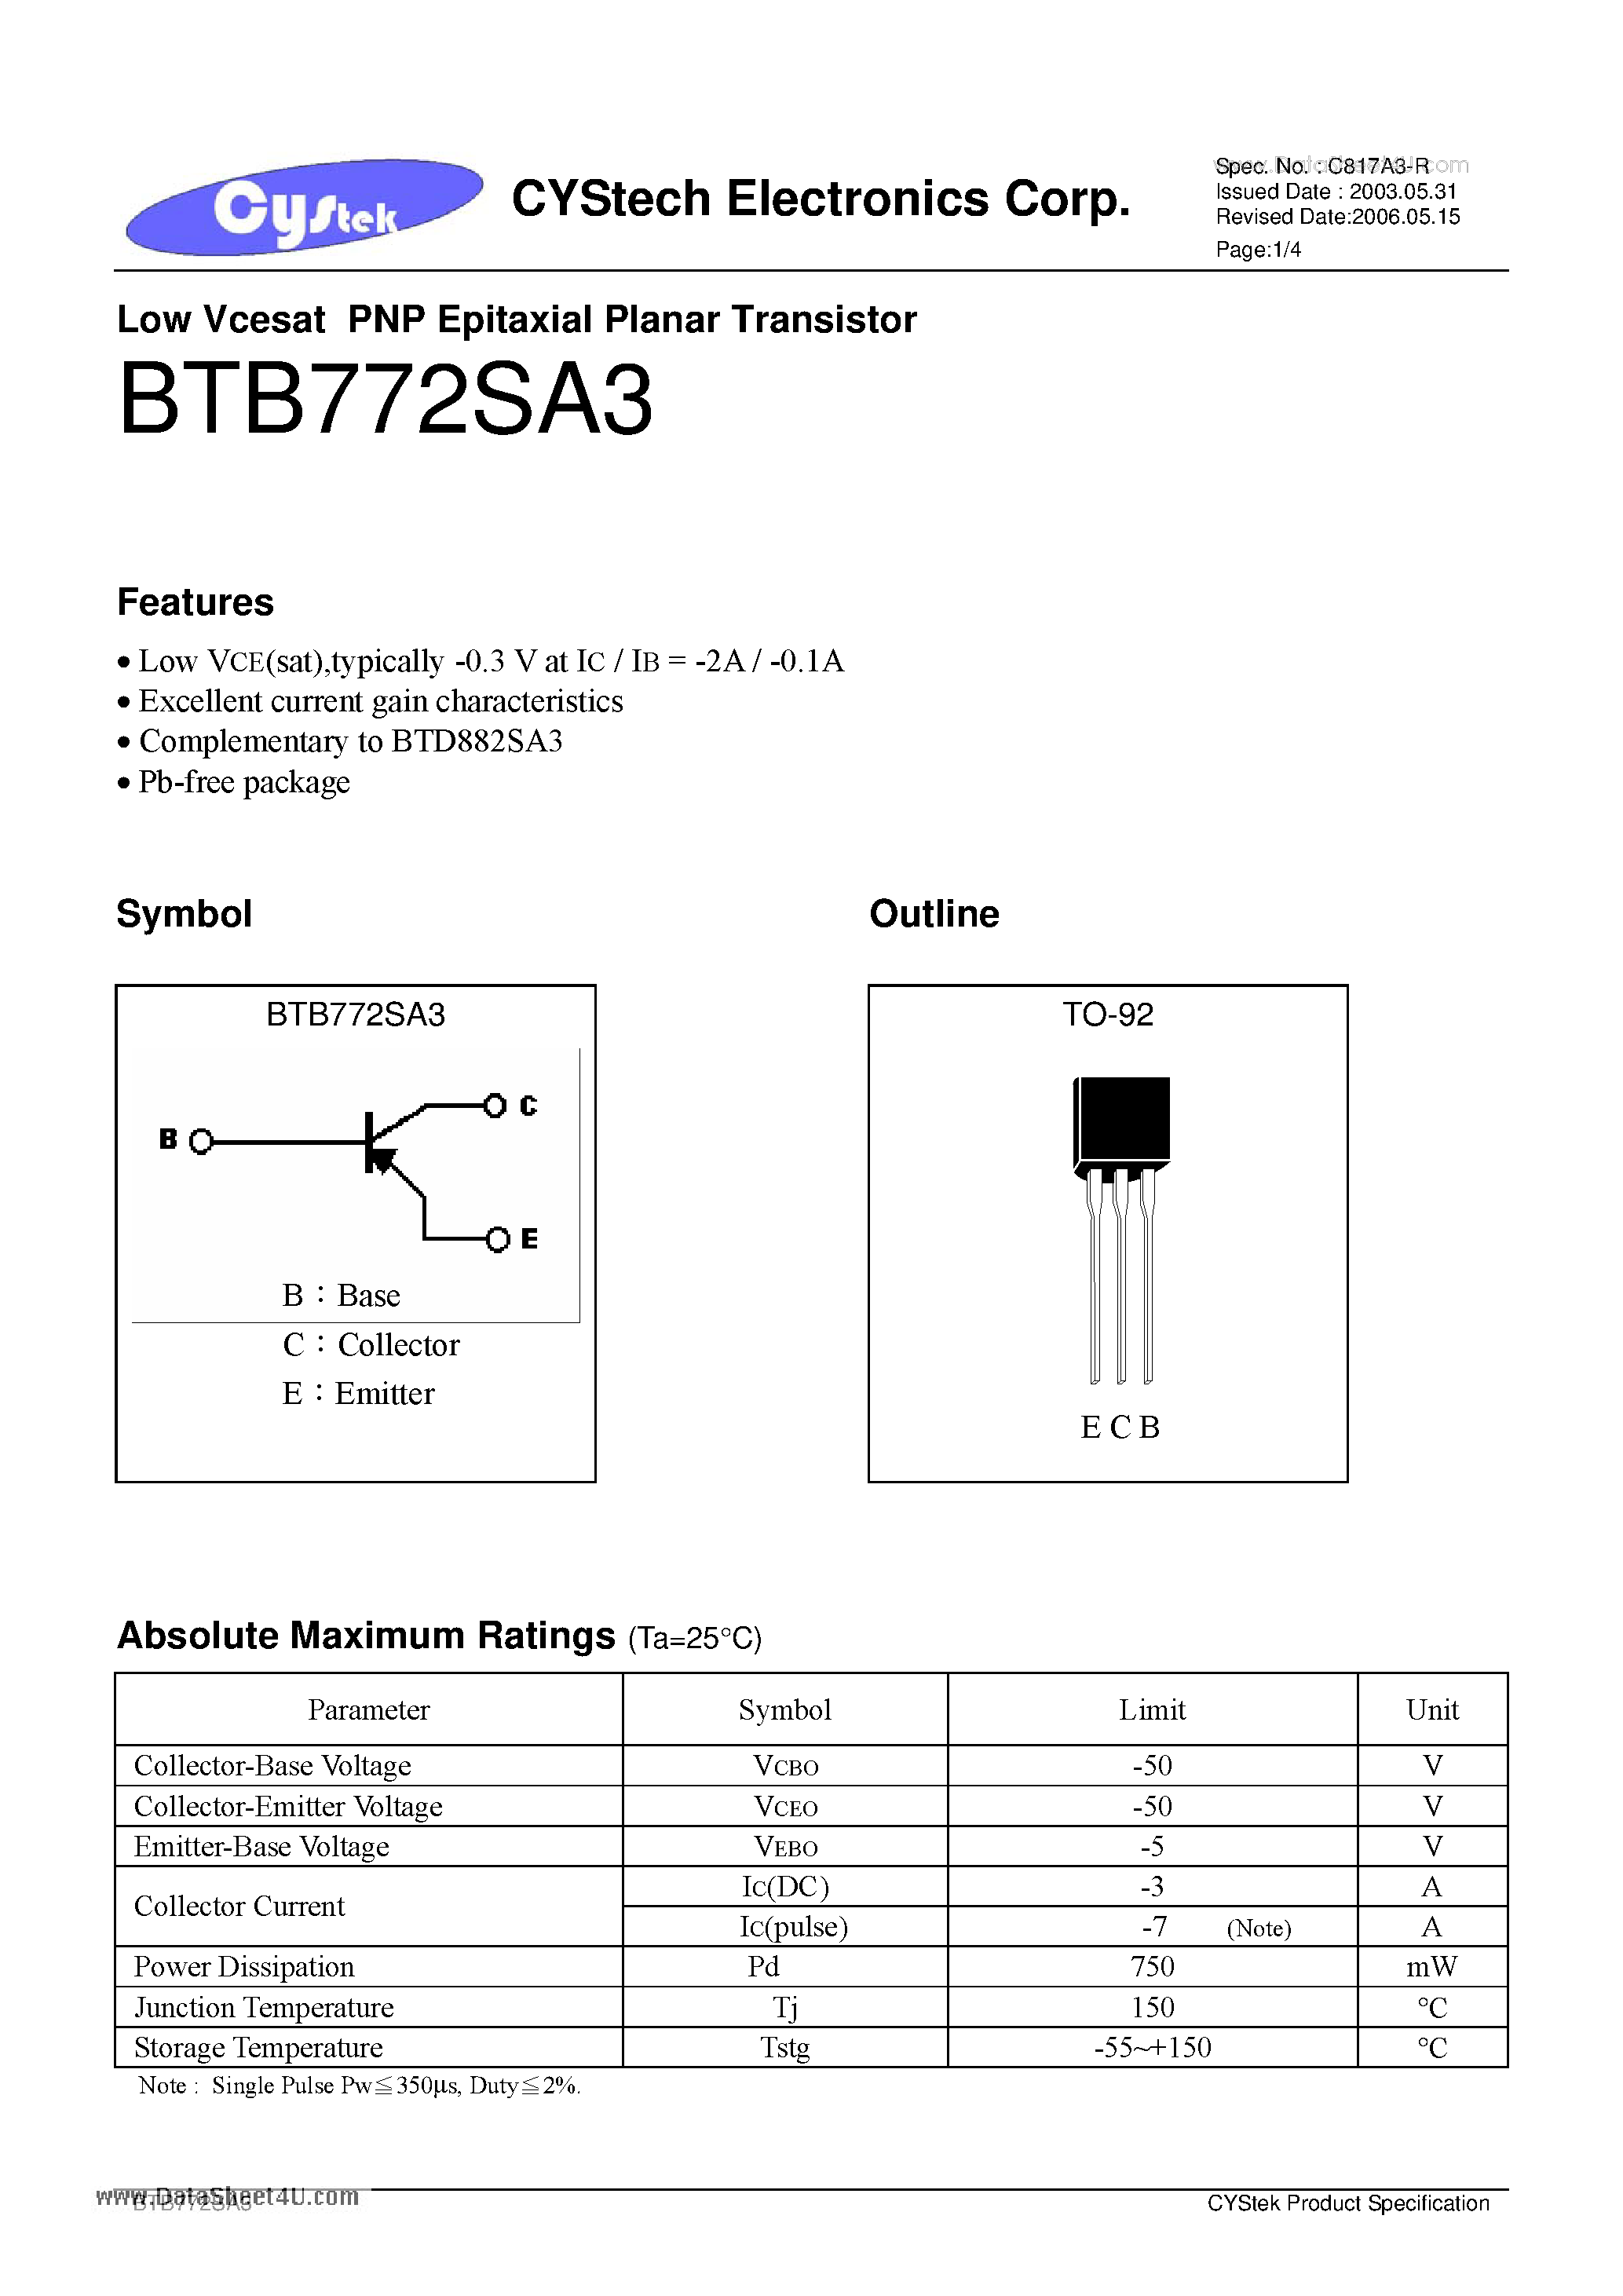 Datasheet BTB772SA3 - Low Vcesat PNP Epitaxial Planar Transistor page 1